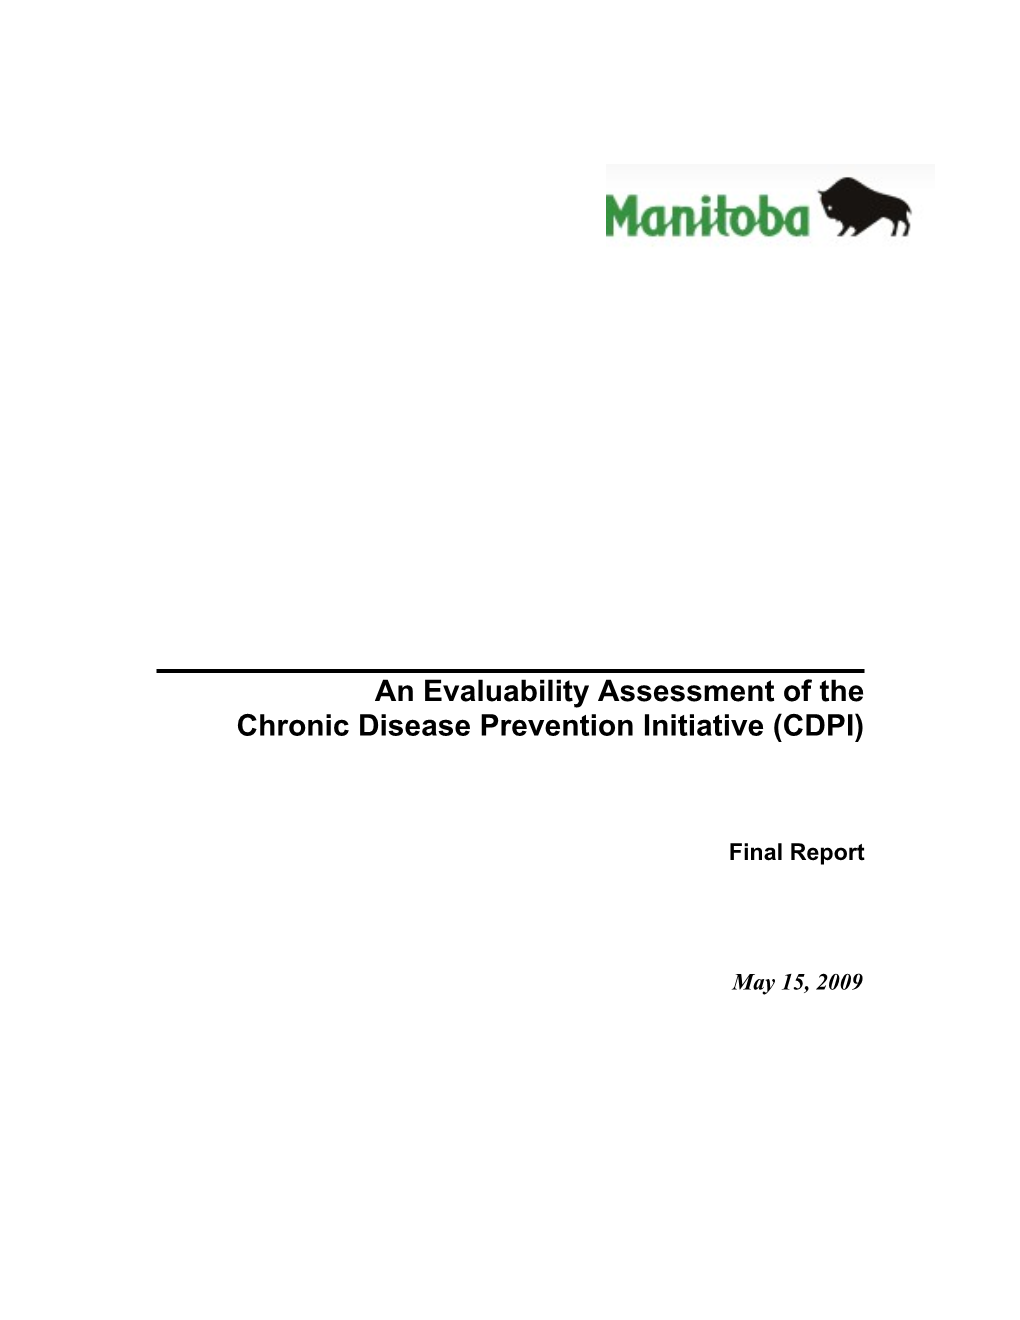 CDPI Evaluability Assessment: Final Report